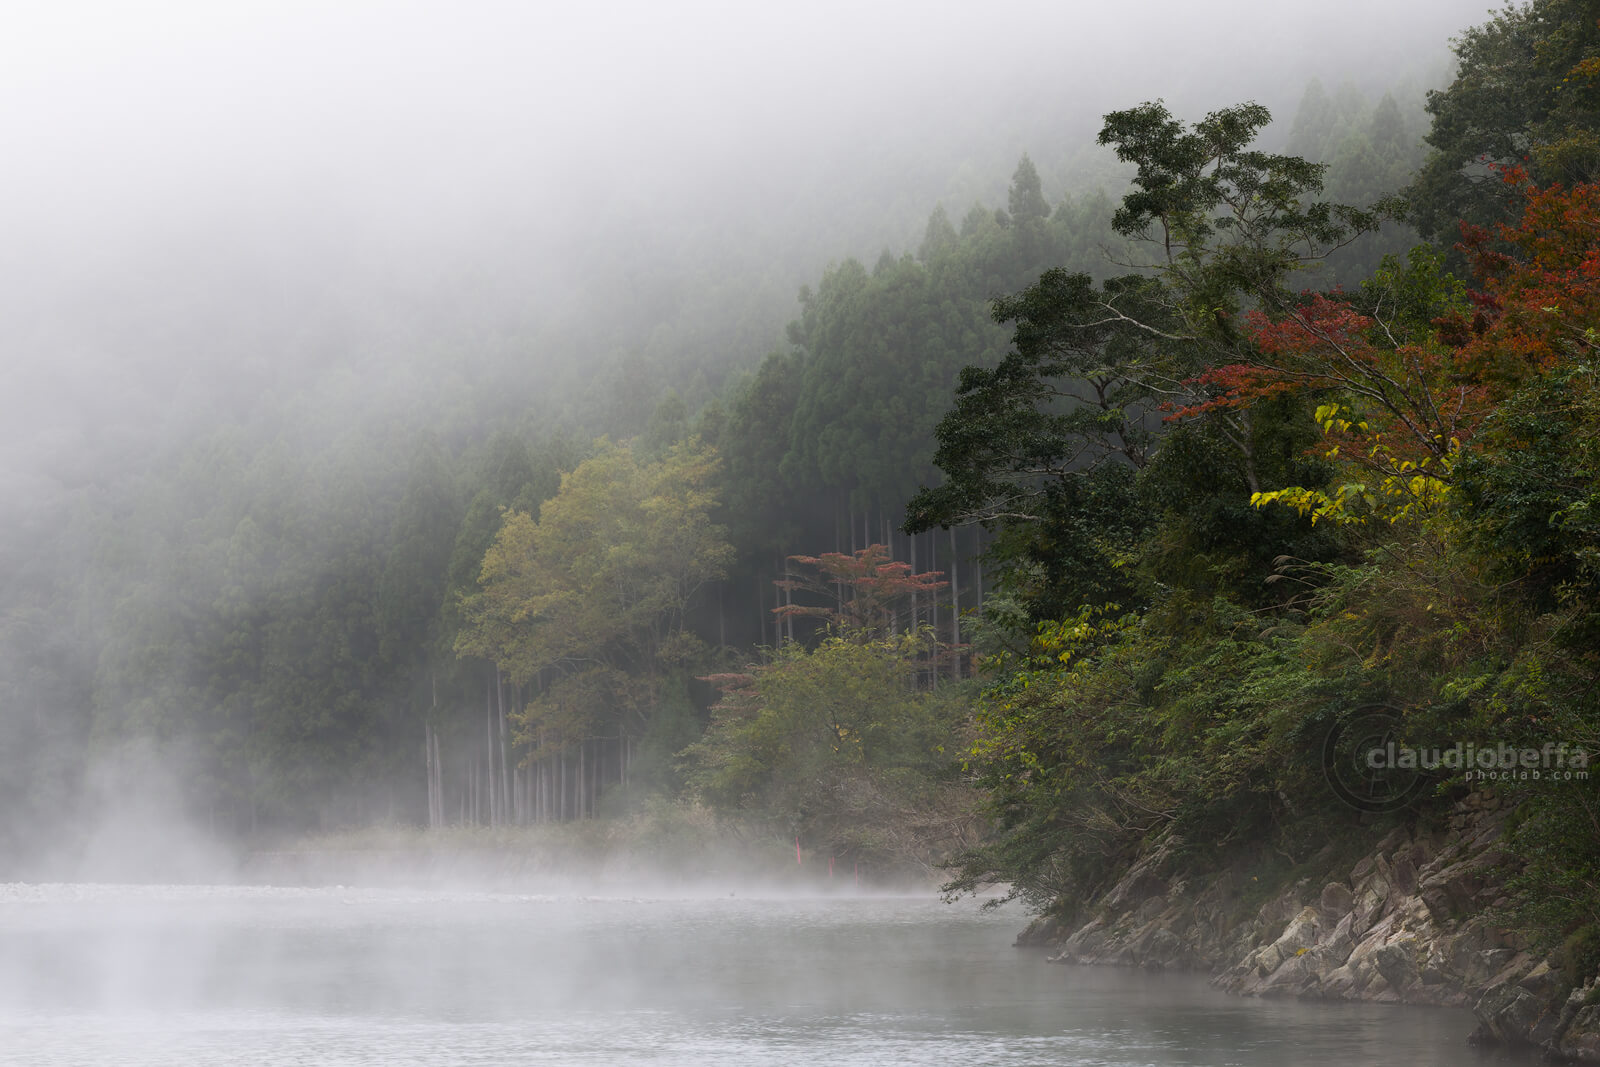 Kii peninsula, Kawayu, Kumano, Japan, River, Fog, Mist, Forest, Autumn, Nature, Travel